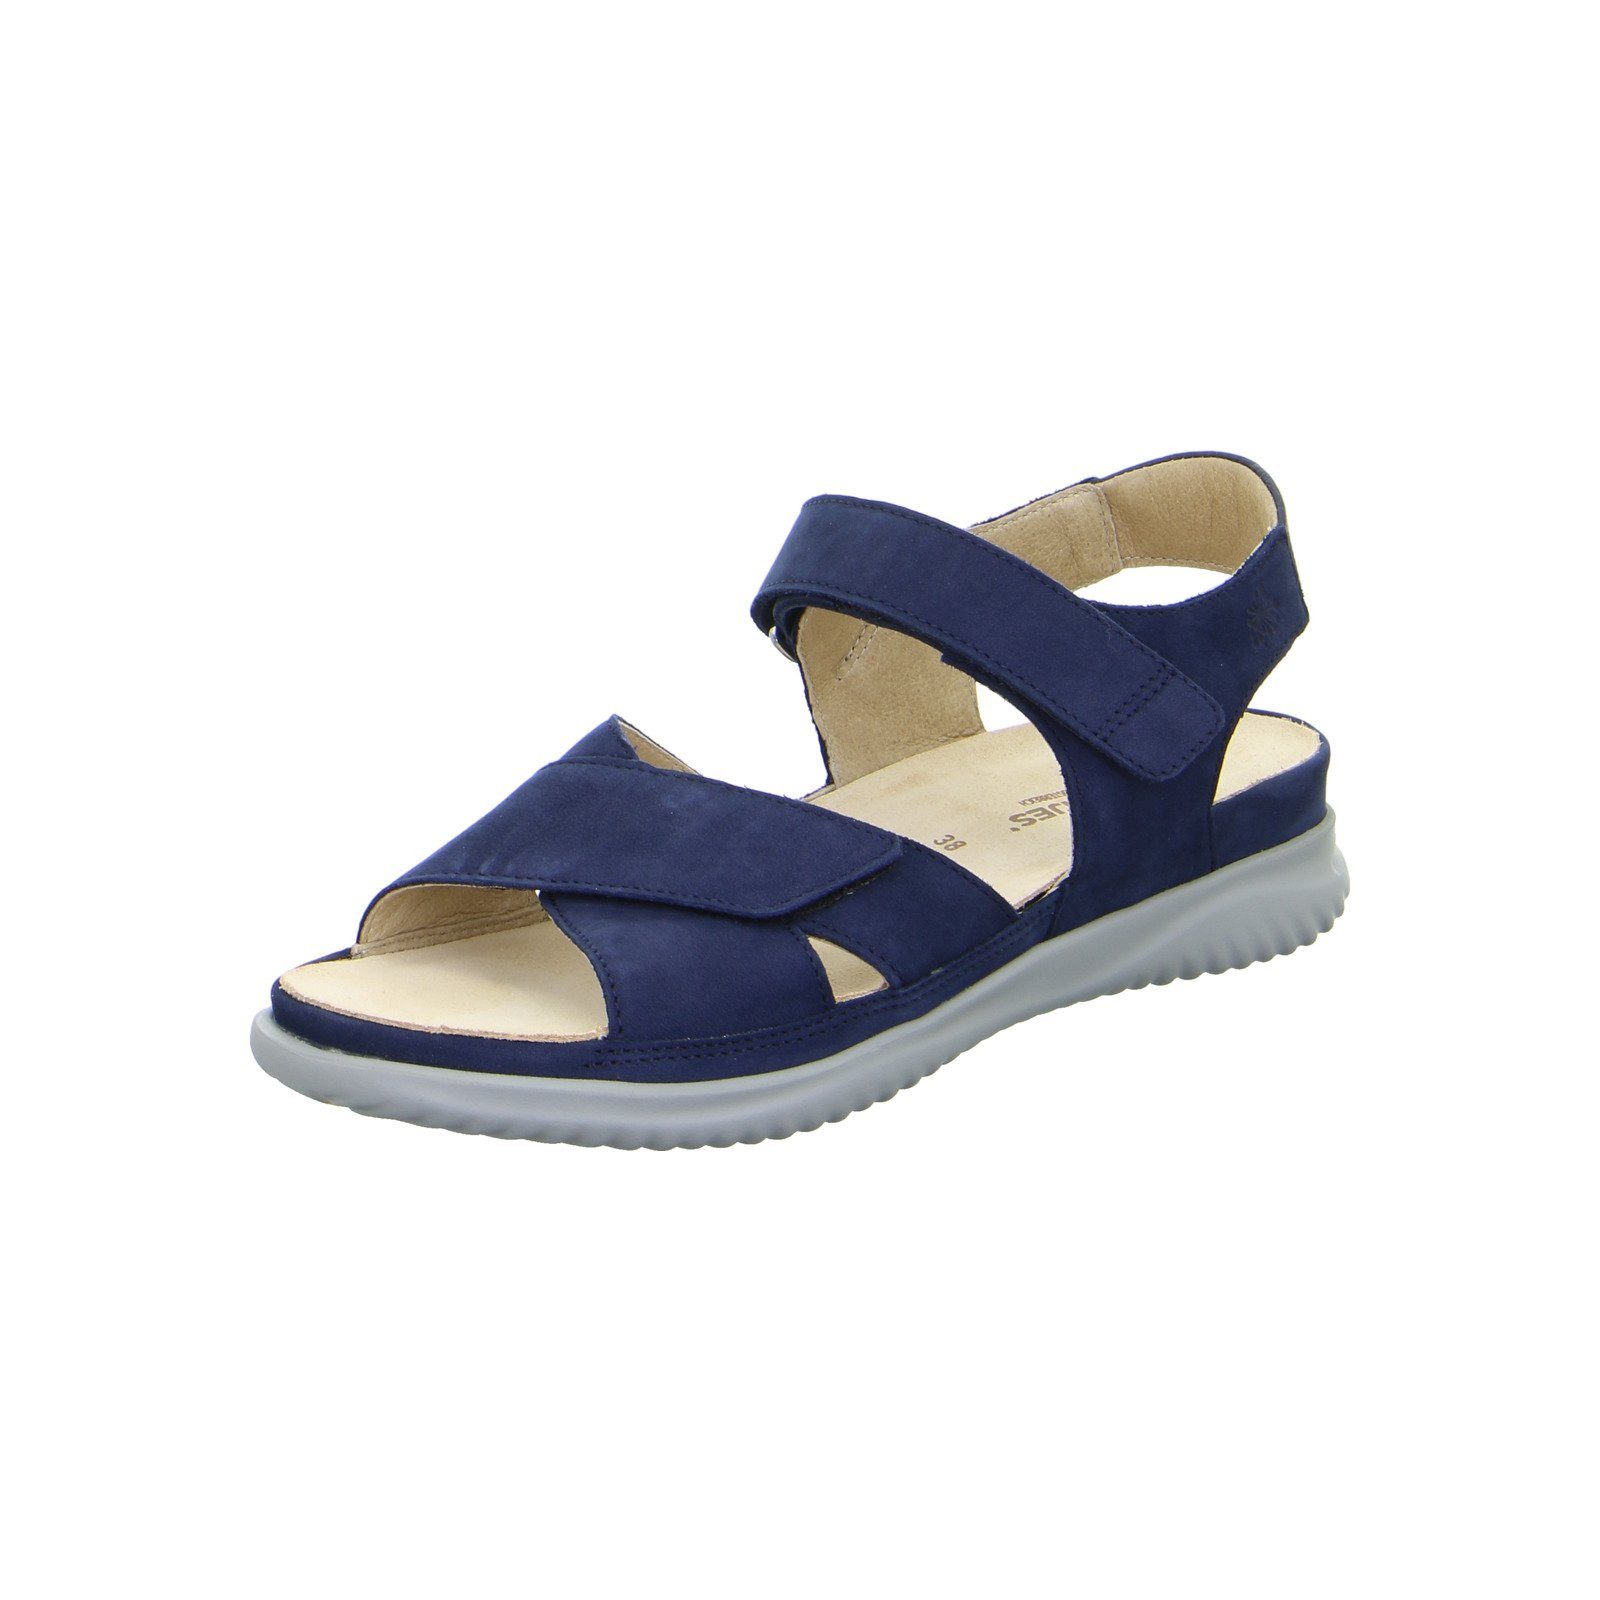 Hartjes Breeze - Damen Взуття Sandalette blau